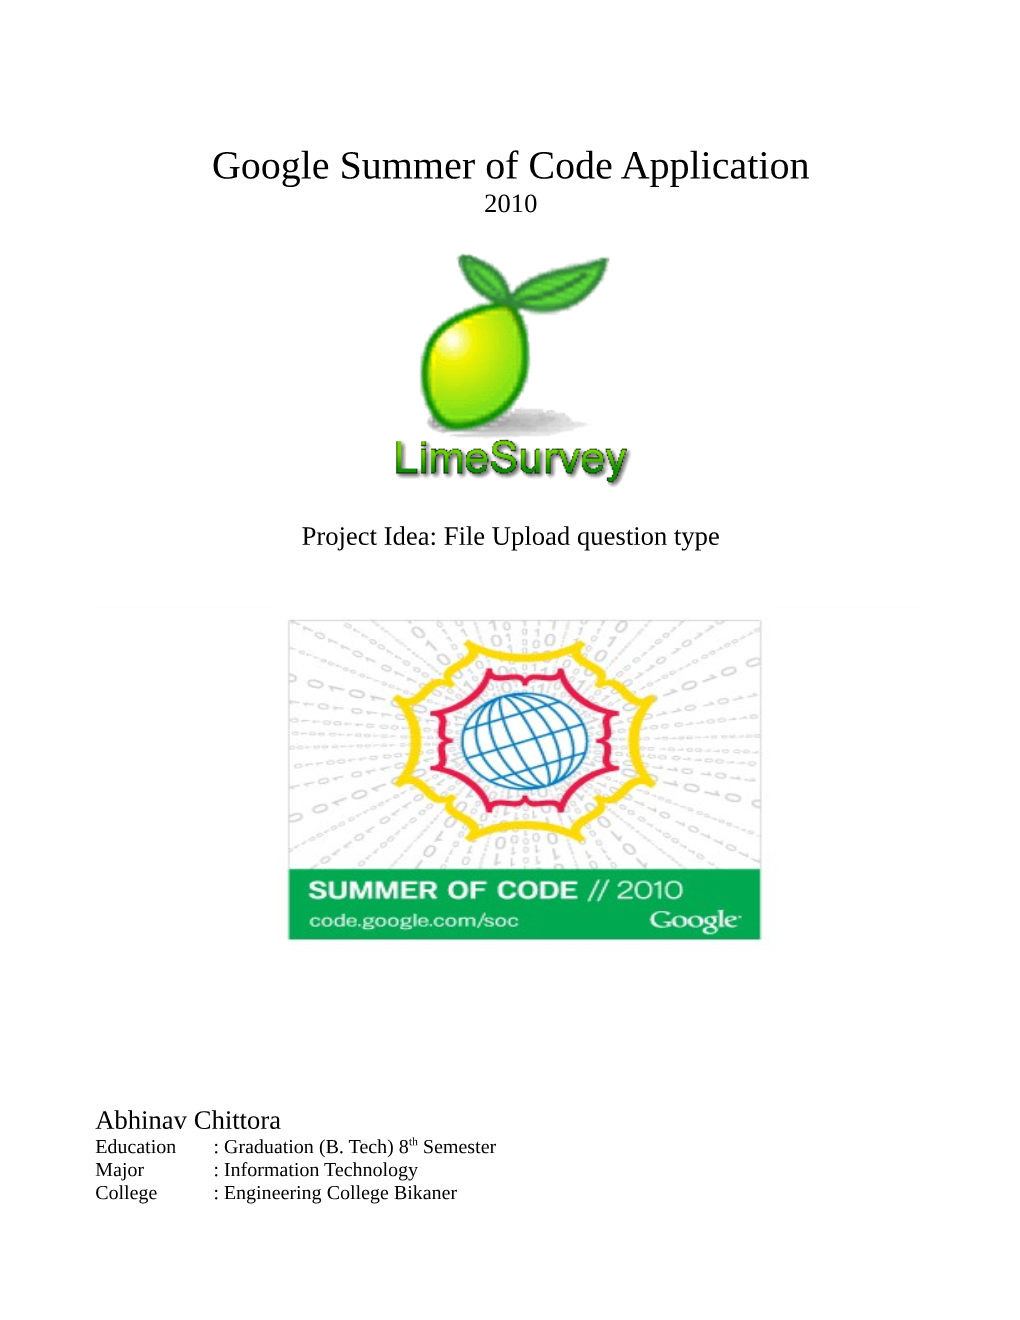 Google Summer of Code Application 2010